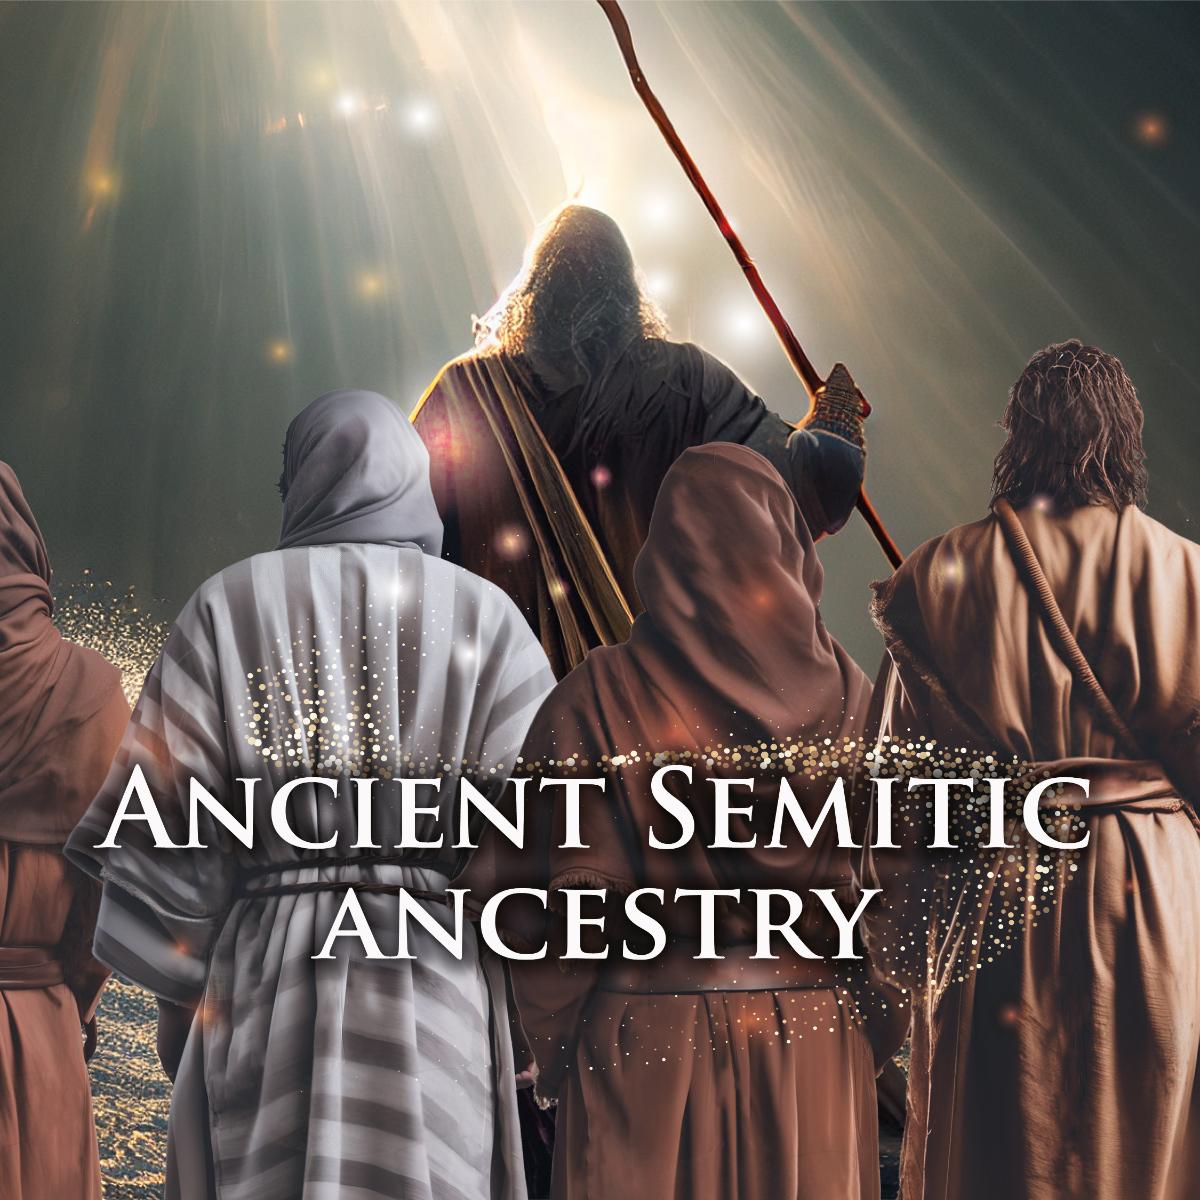 Ancient Semitic Ancestry